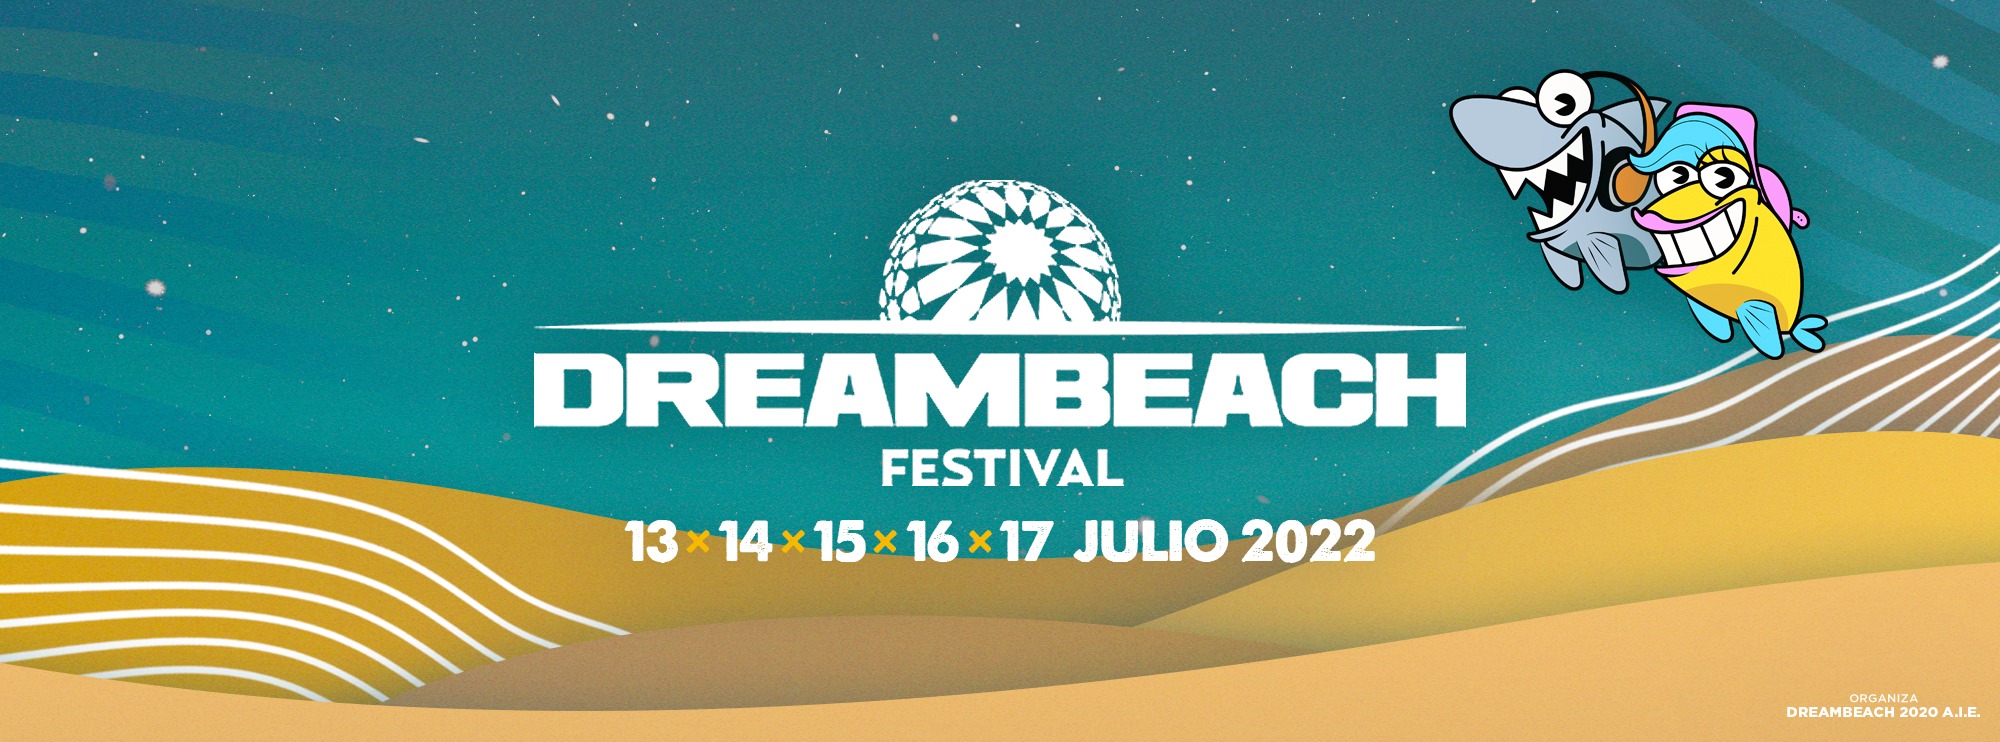 DREAMBEACH FESTIVAL 2022